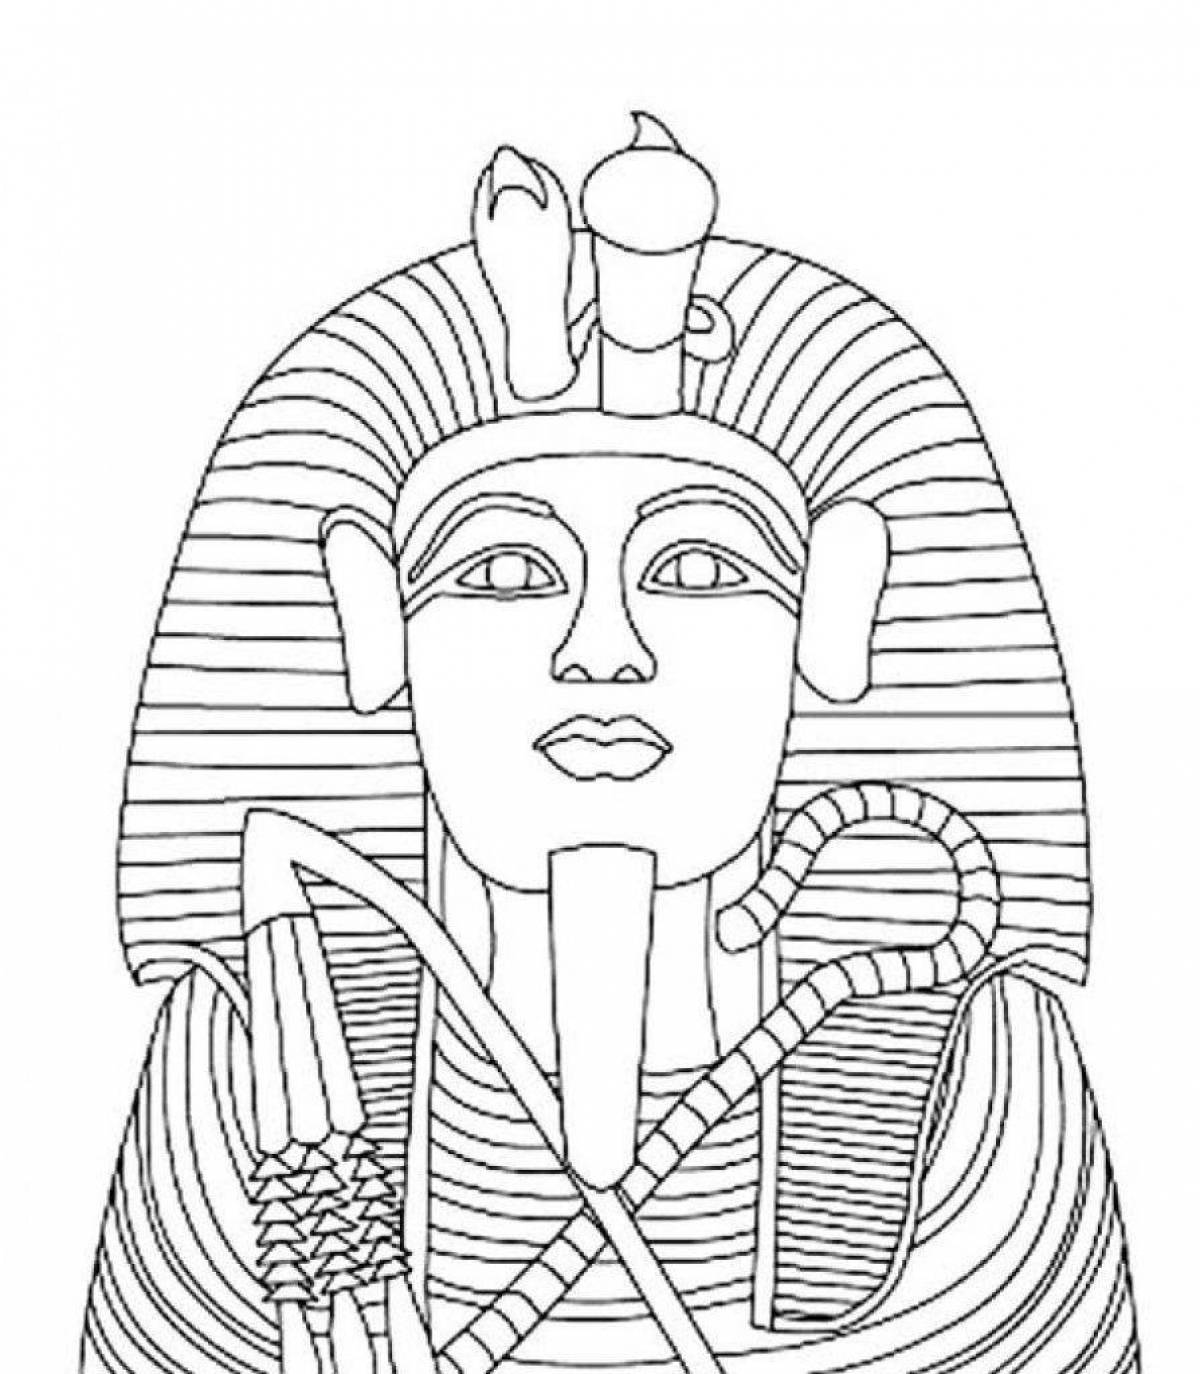 Раскраска величественная маска фараона